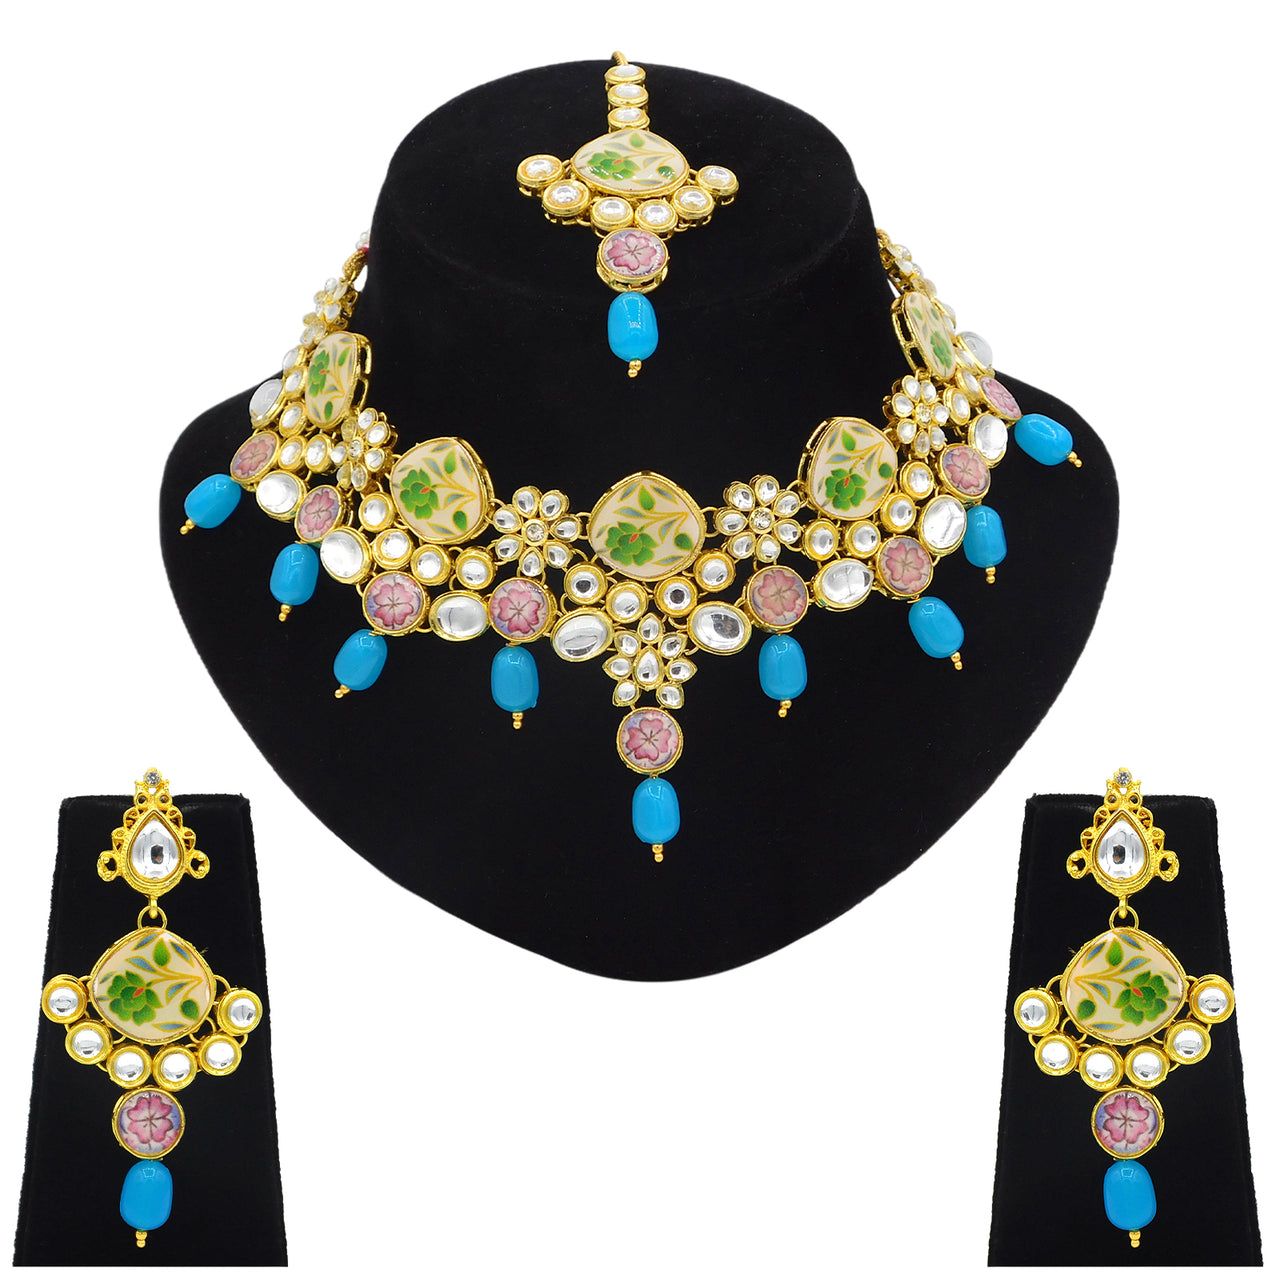 Sujwel Kundan and Painting with Floral Design Chokar Necklace Set (08-0292) - Sujwel